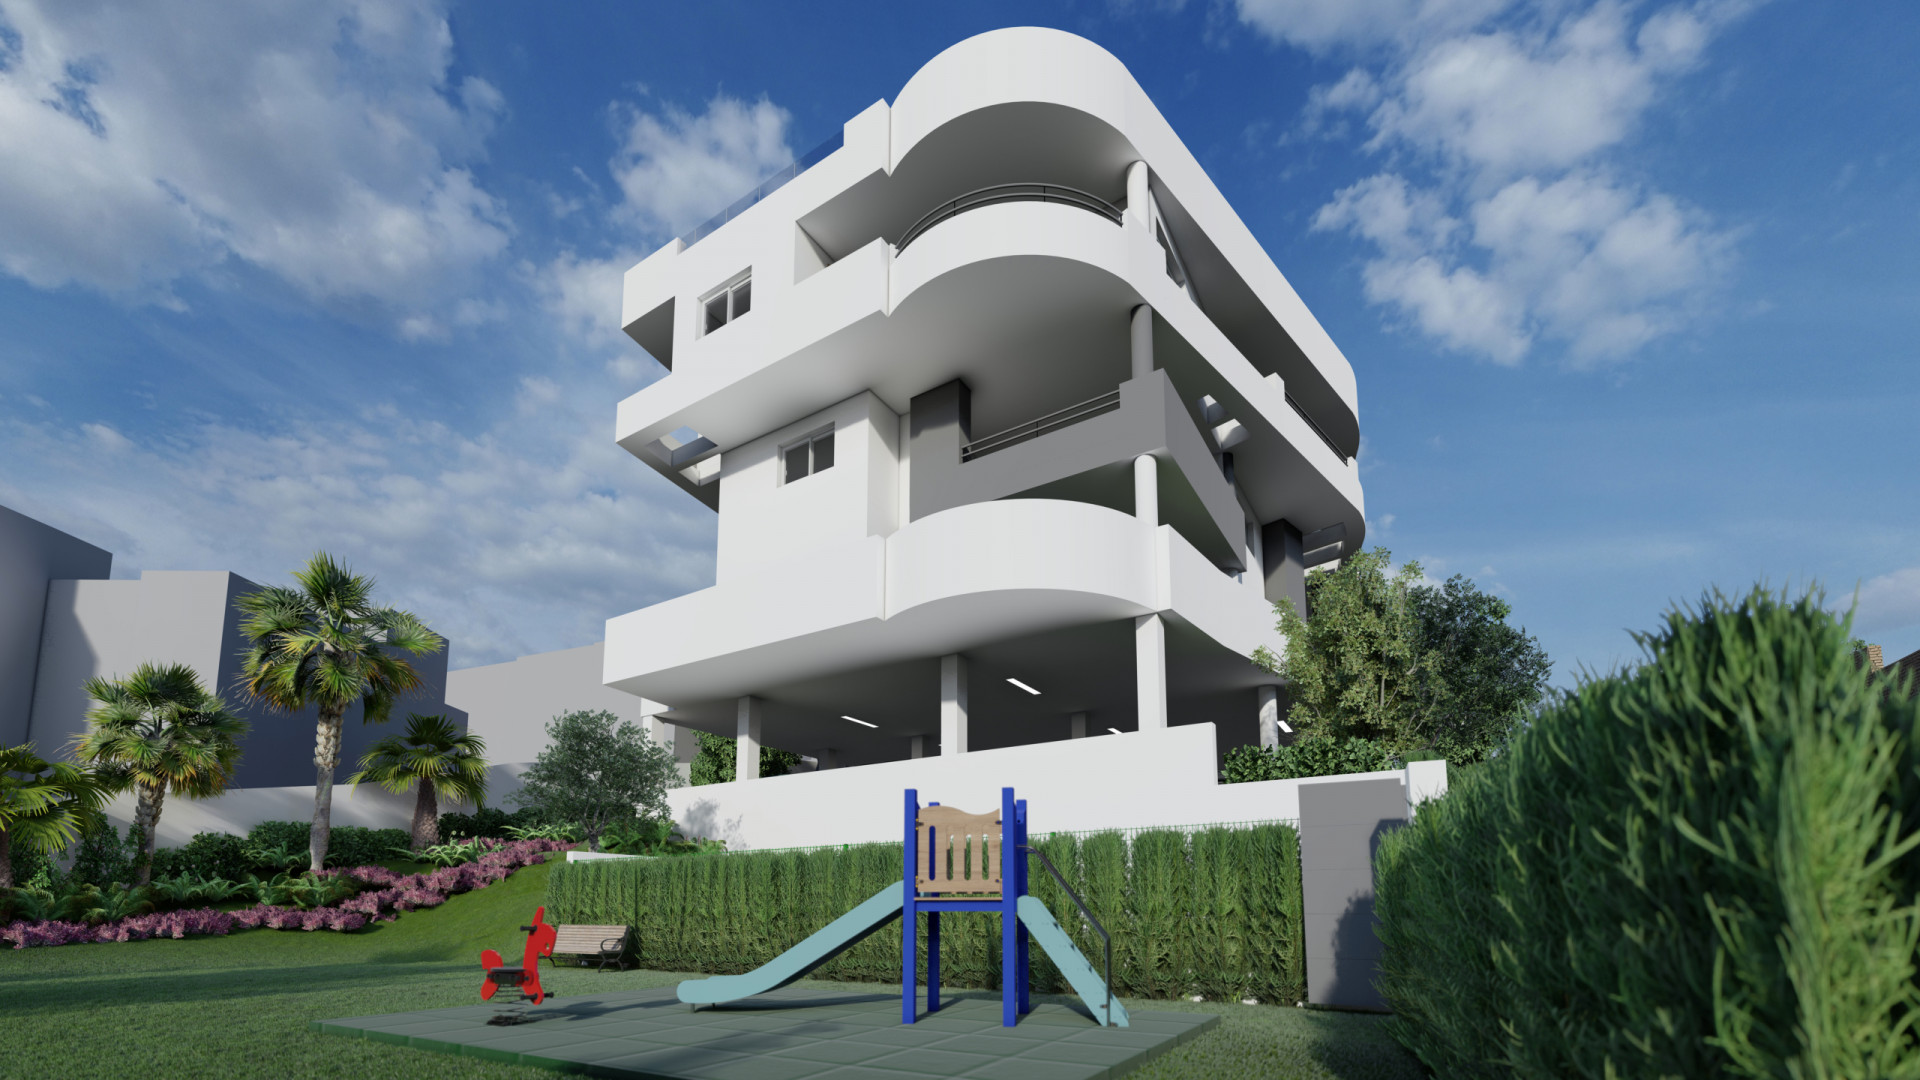 Balcón de Montemar: Flats and penthouses from 2 to 4 bedrooms located in Torremolinos. | Image 3